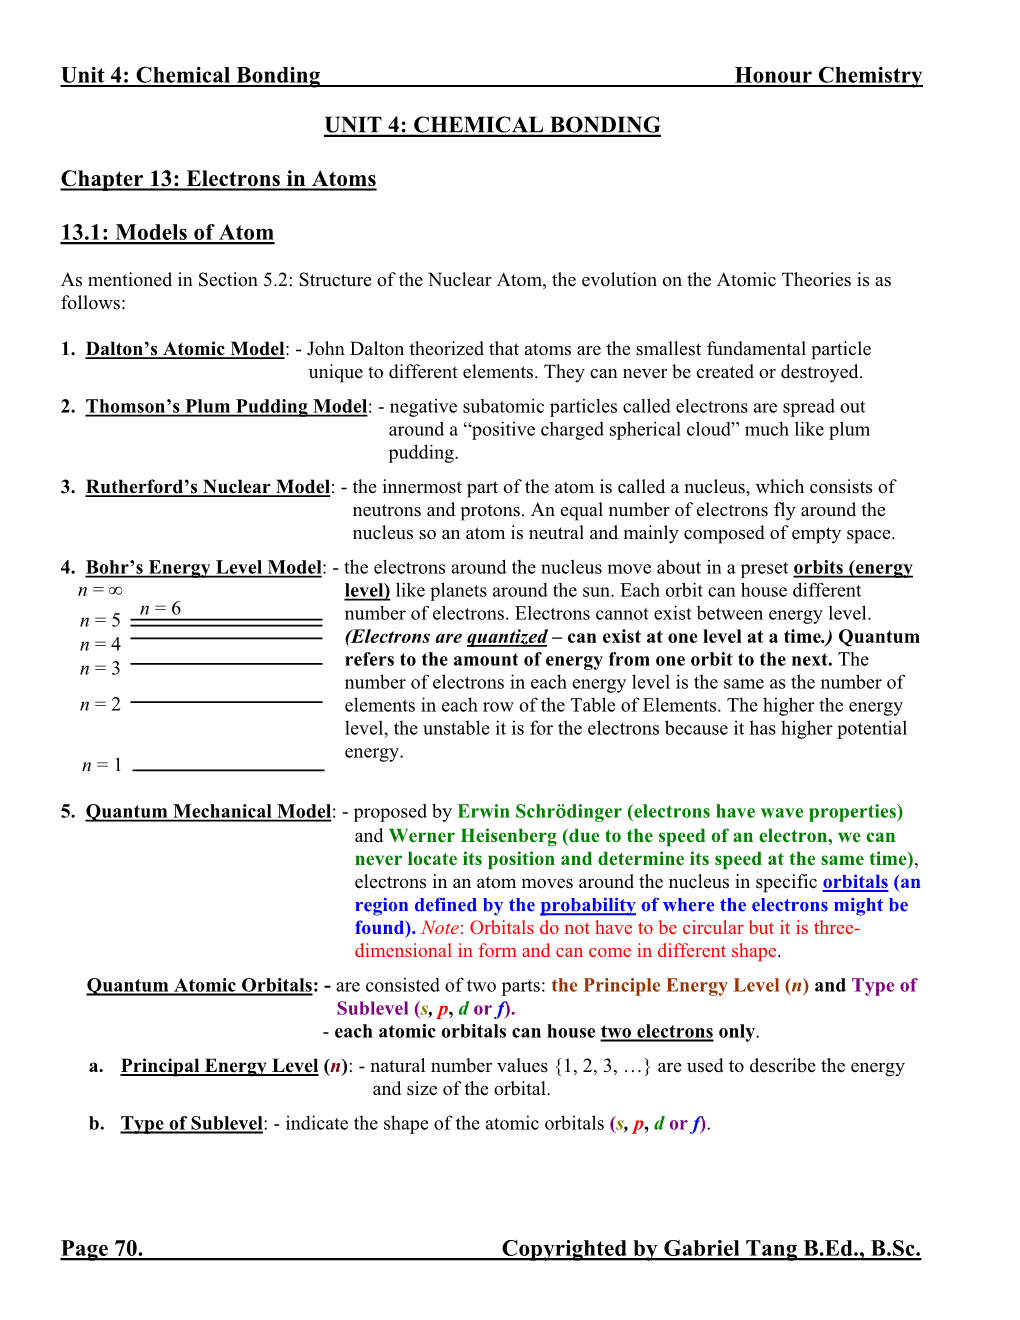 Unit 4 Chemical Bonding Notes (Answers)